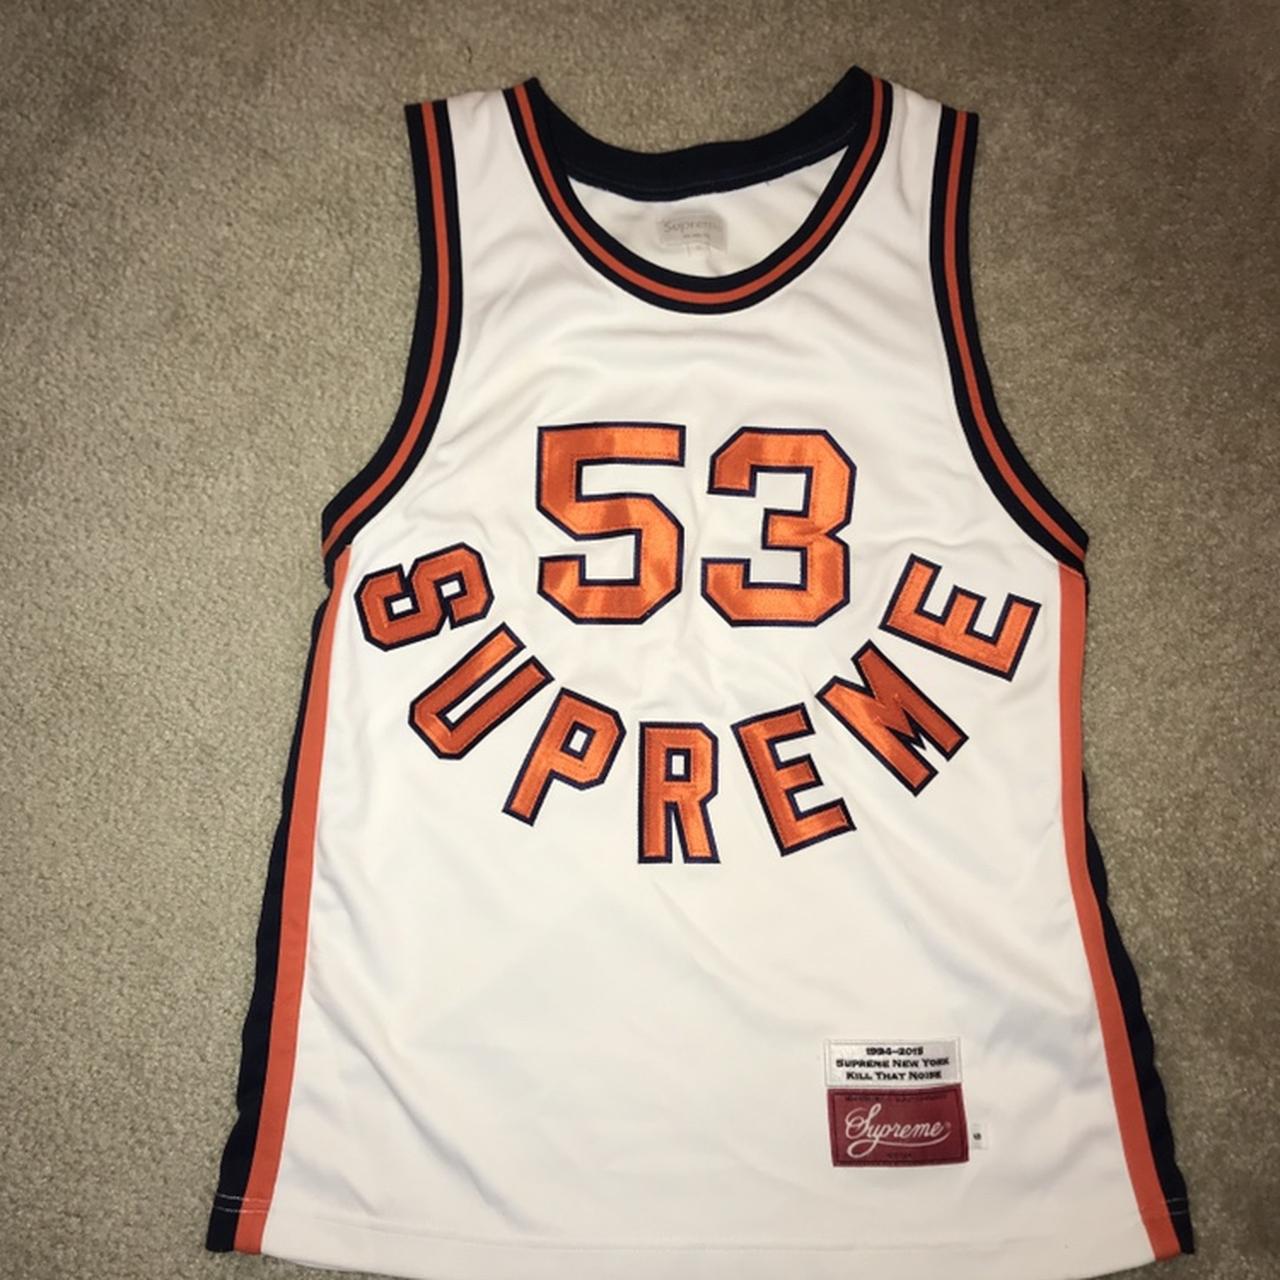 New Supreme NBA Jersey in White Size Medium S18 - Depop